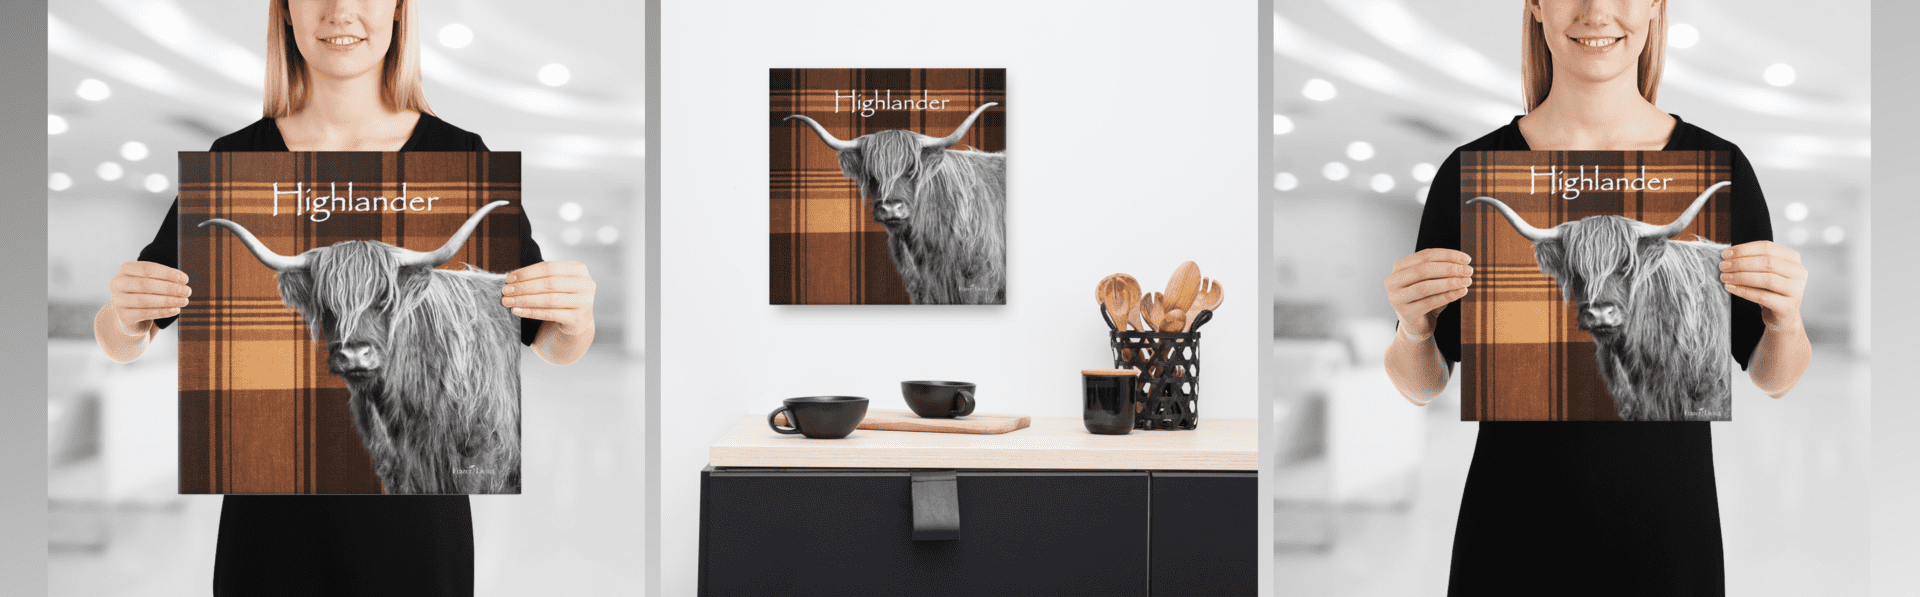 Highland cow on plaid background.